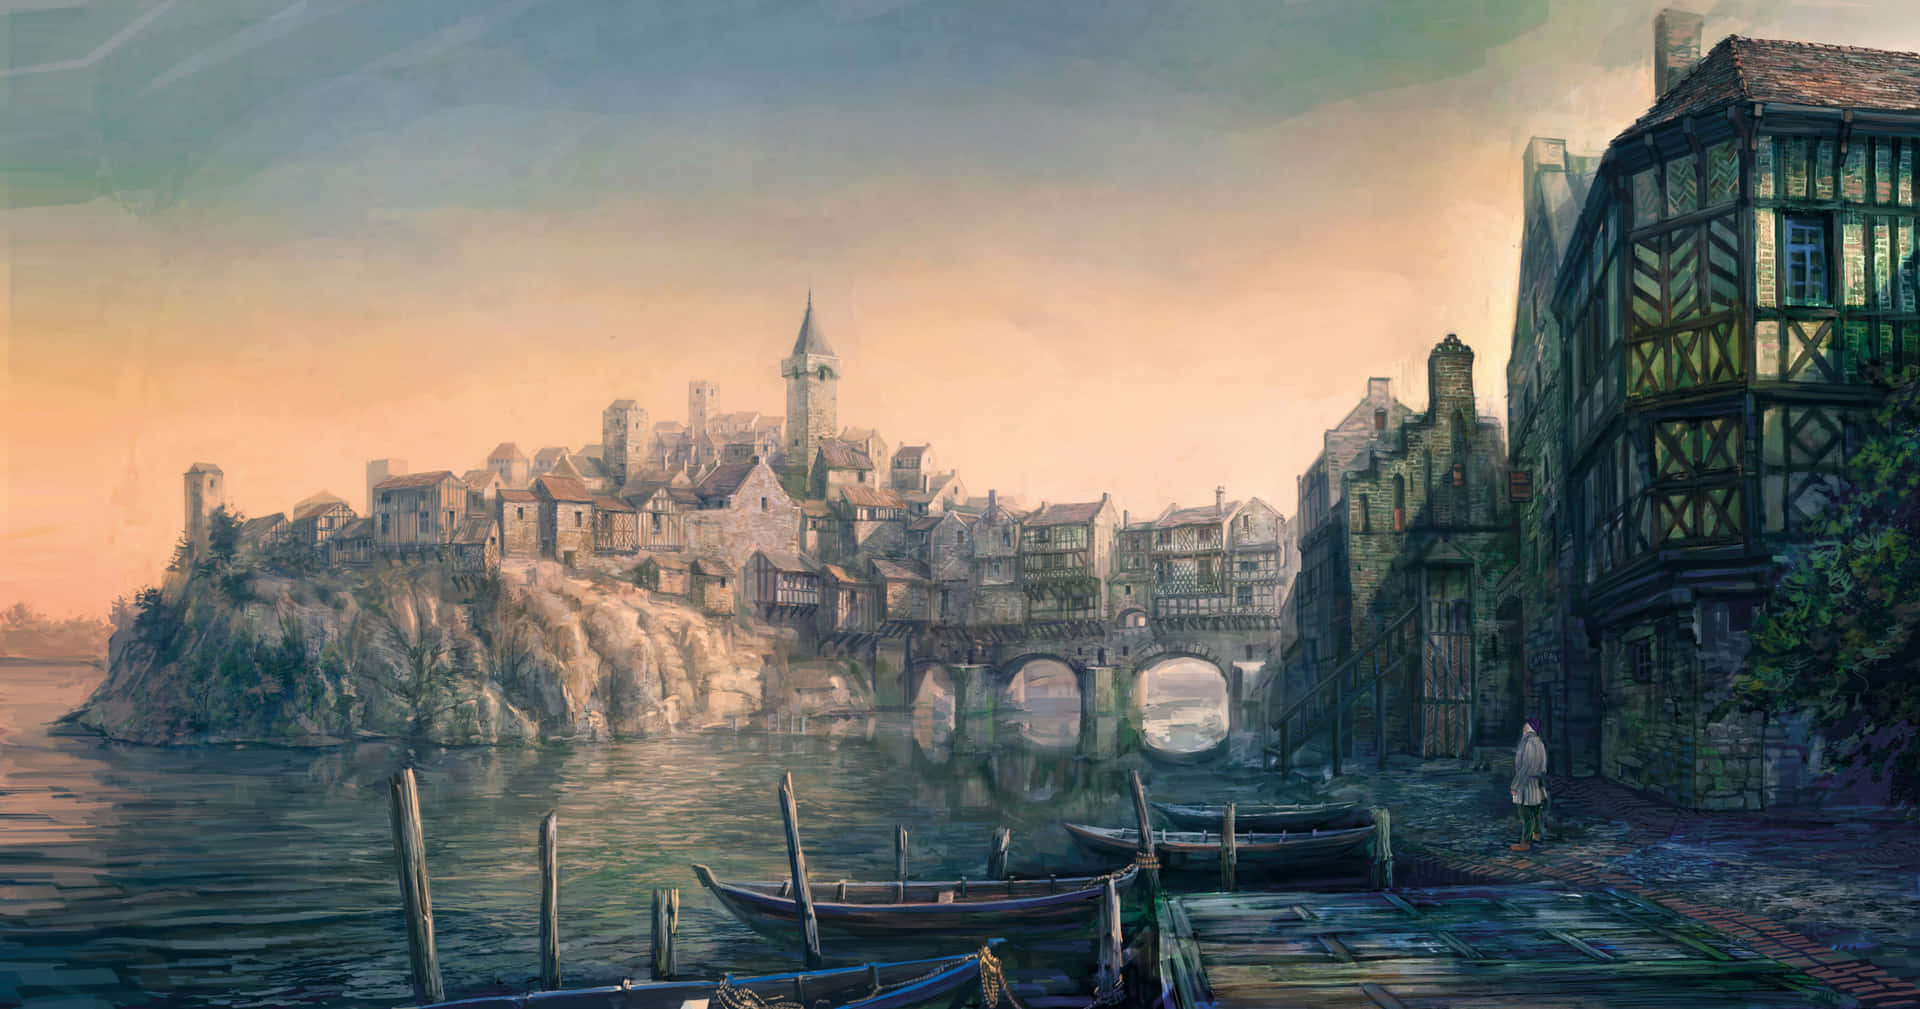 Novigrad City In The Witcher Universe Wallpaper